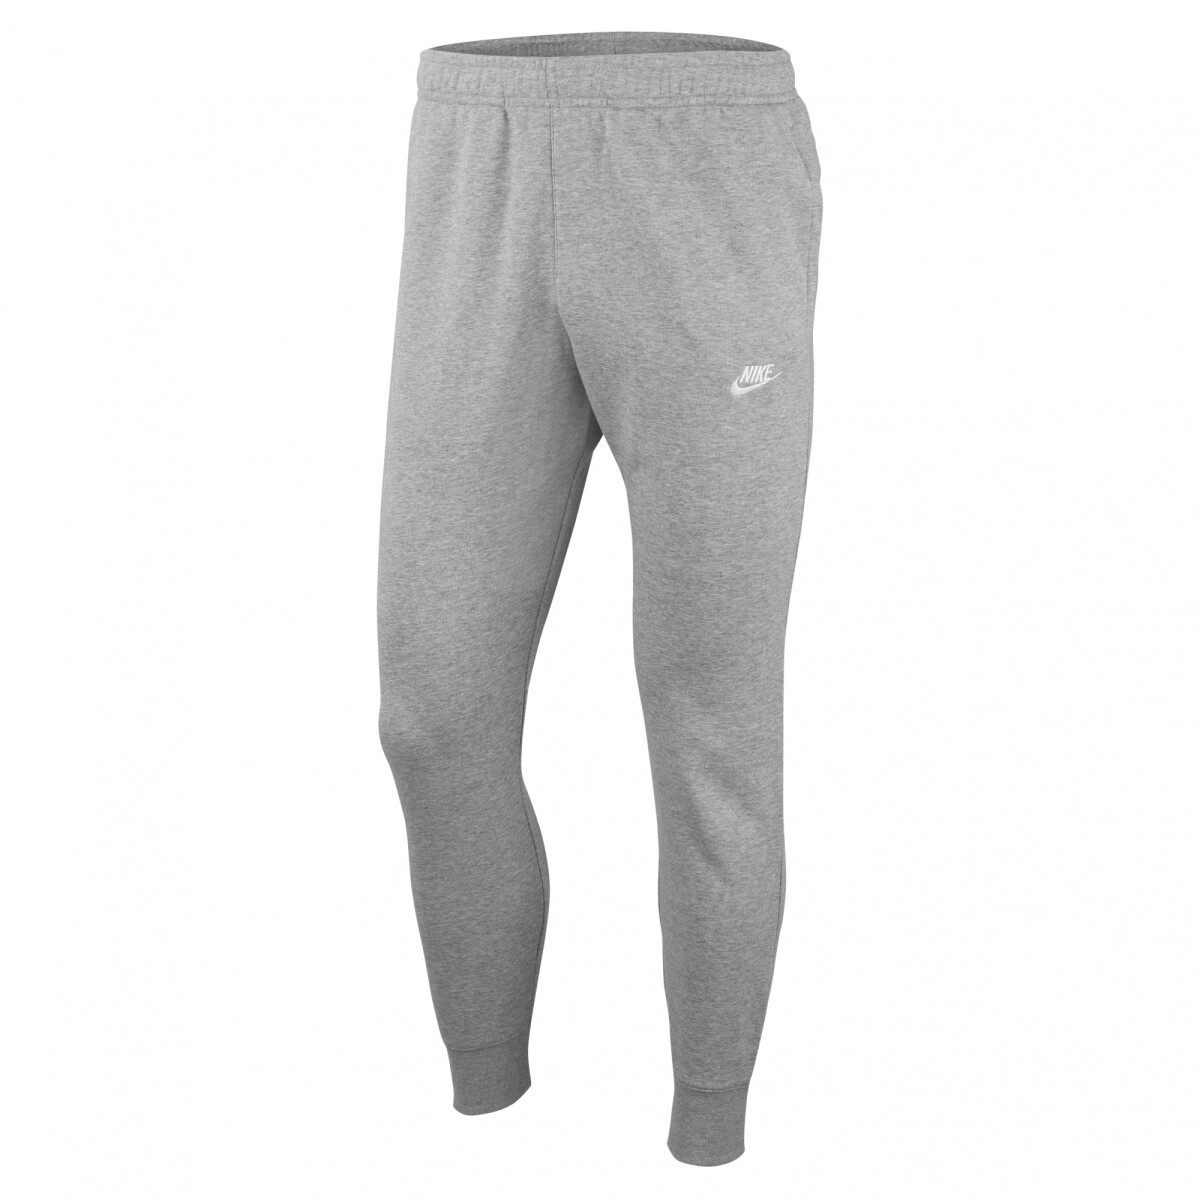 Pantalon Nike Moda Hombre Club Jggr Grey - S/C 